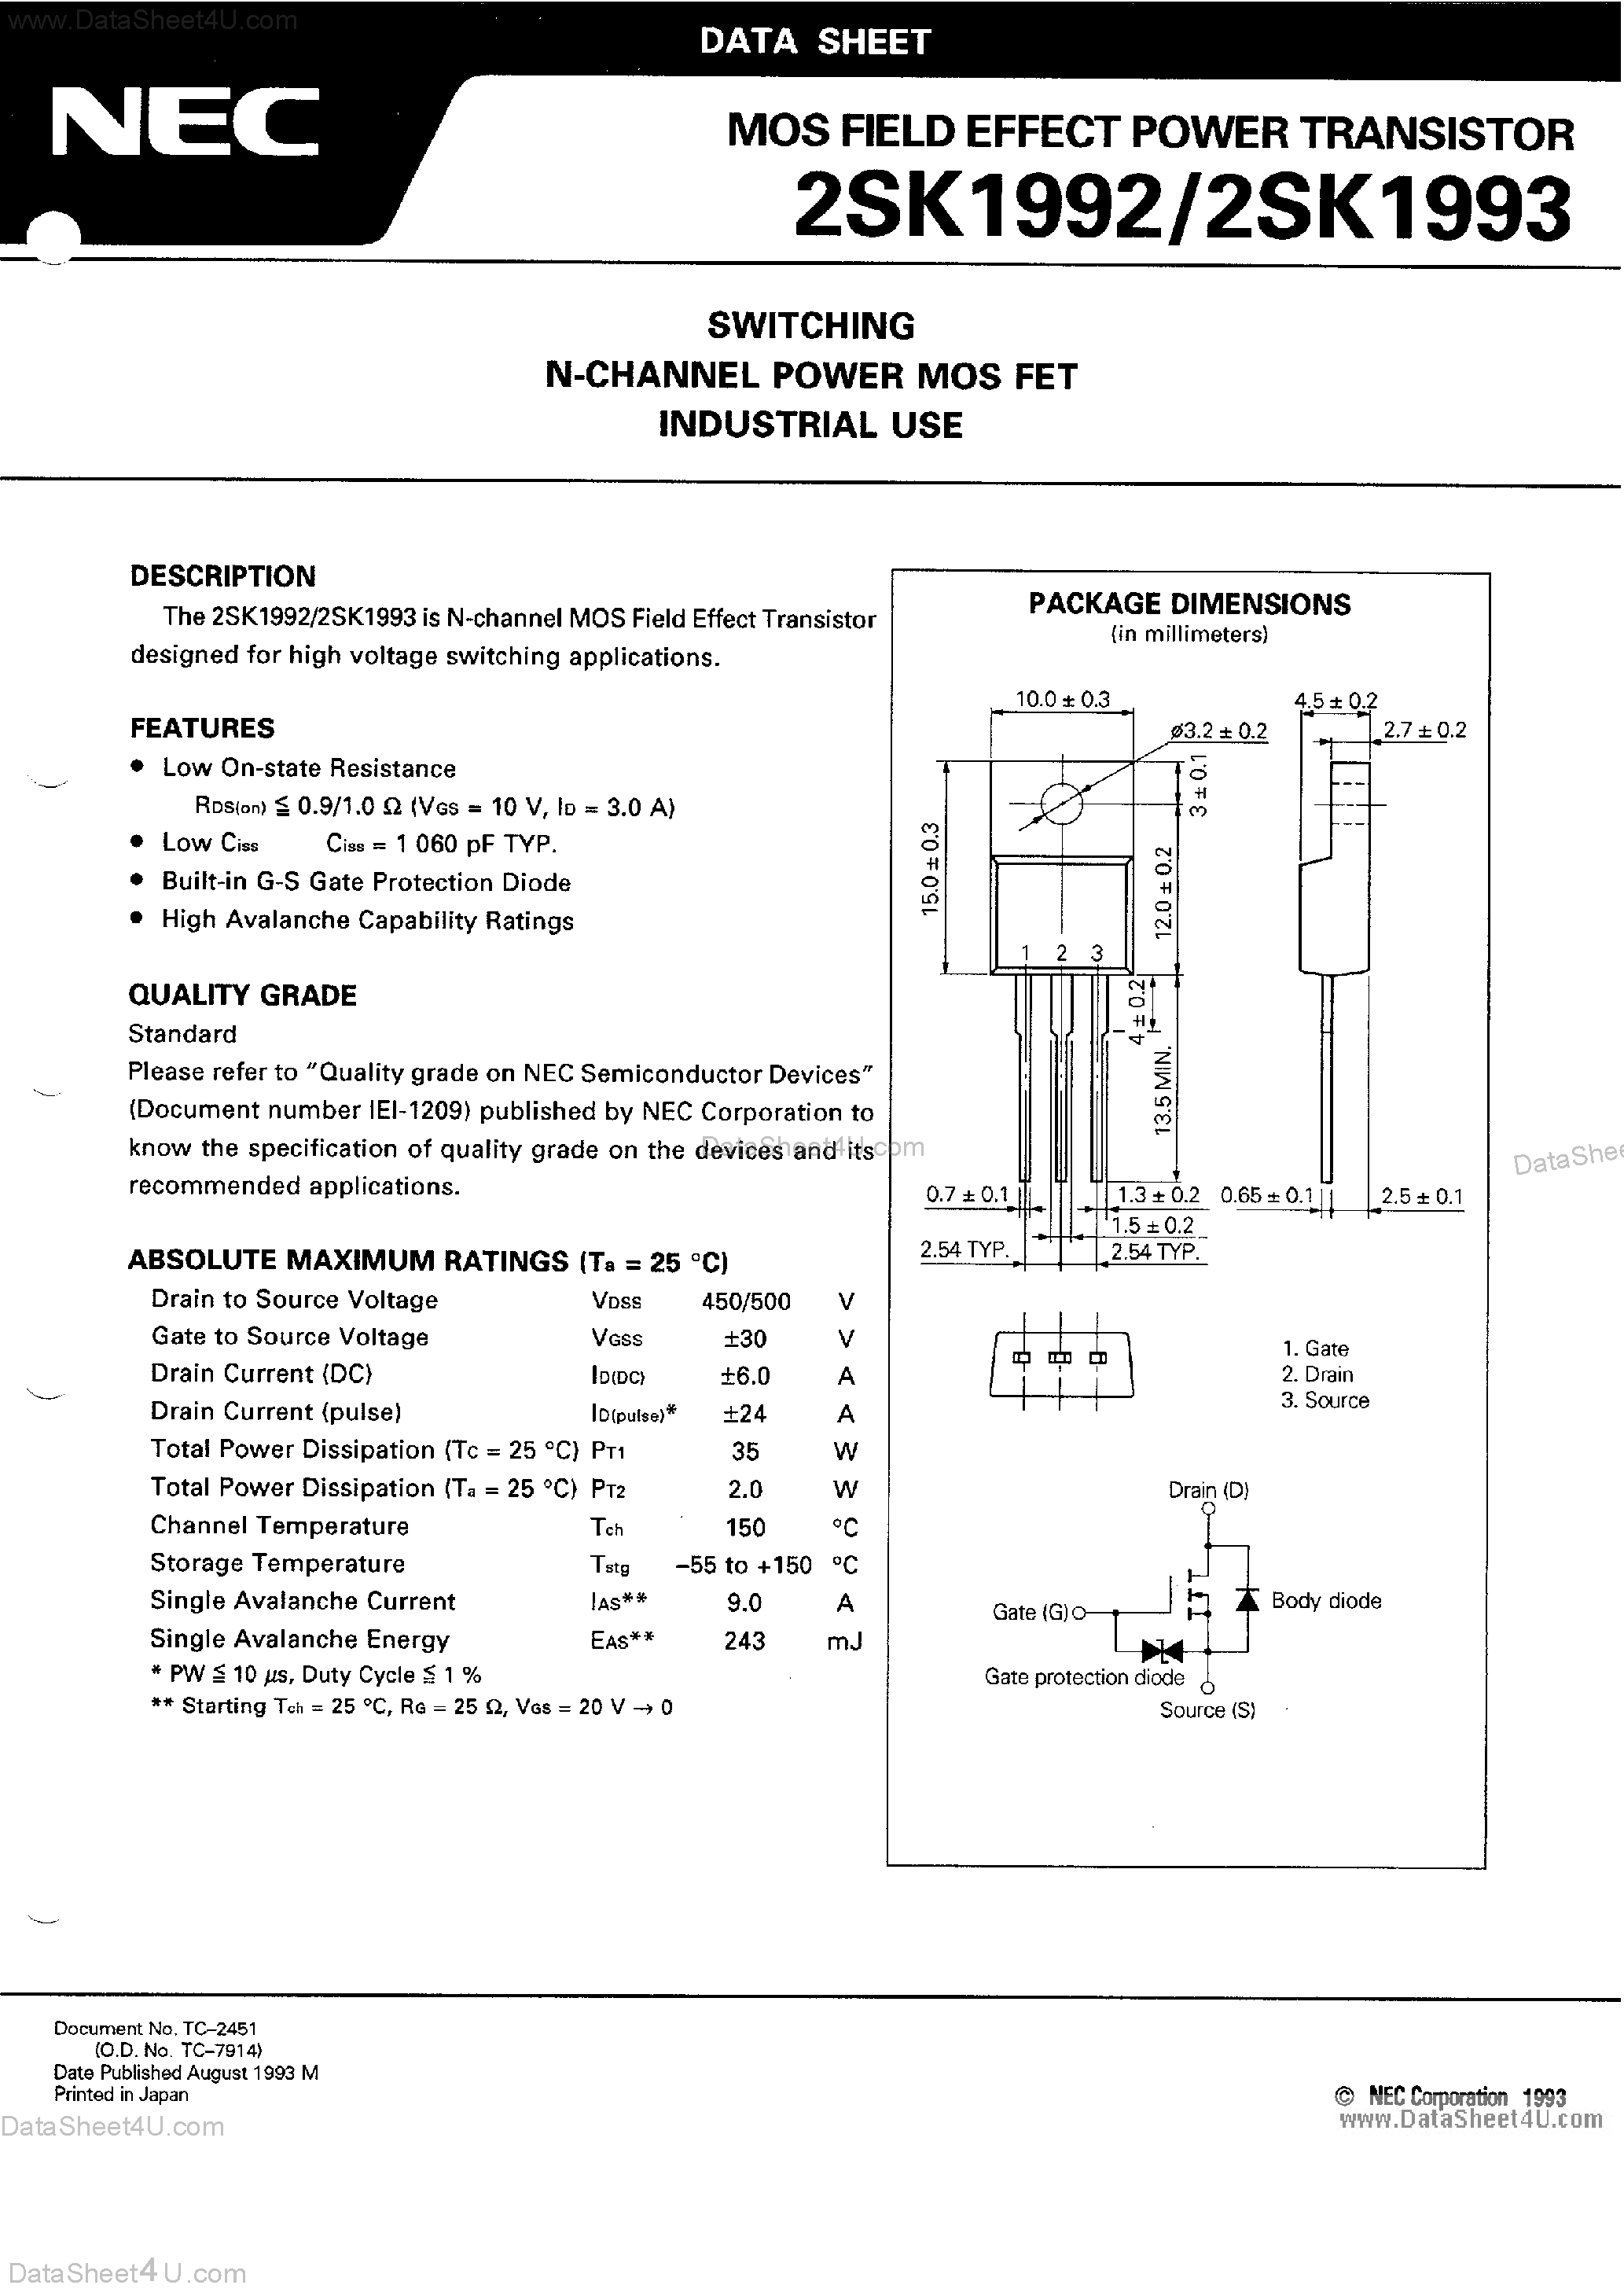 Datasheet 2SK1992 - (2SK1992 / 2SK1993) MOS Field Effect Power Transistor page 1